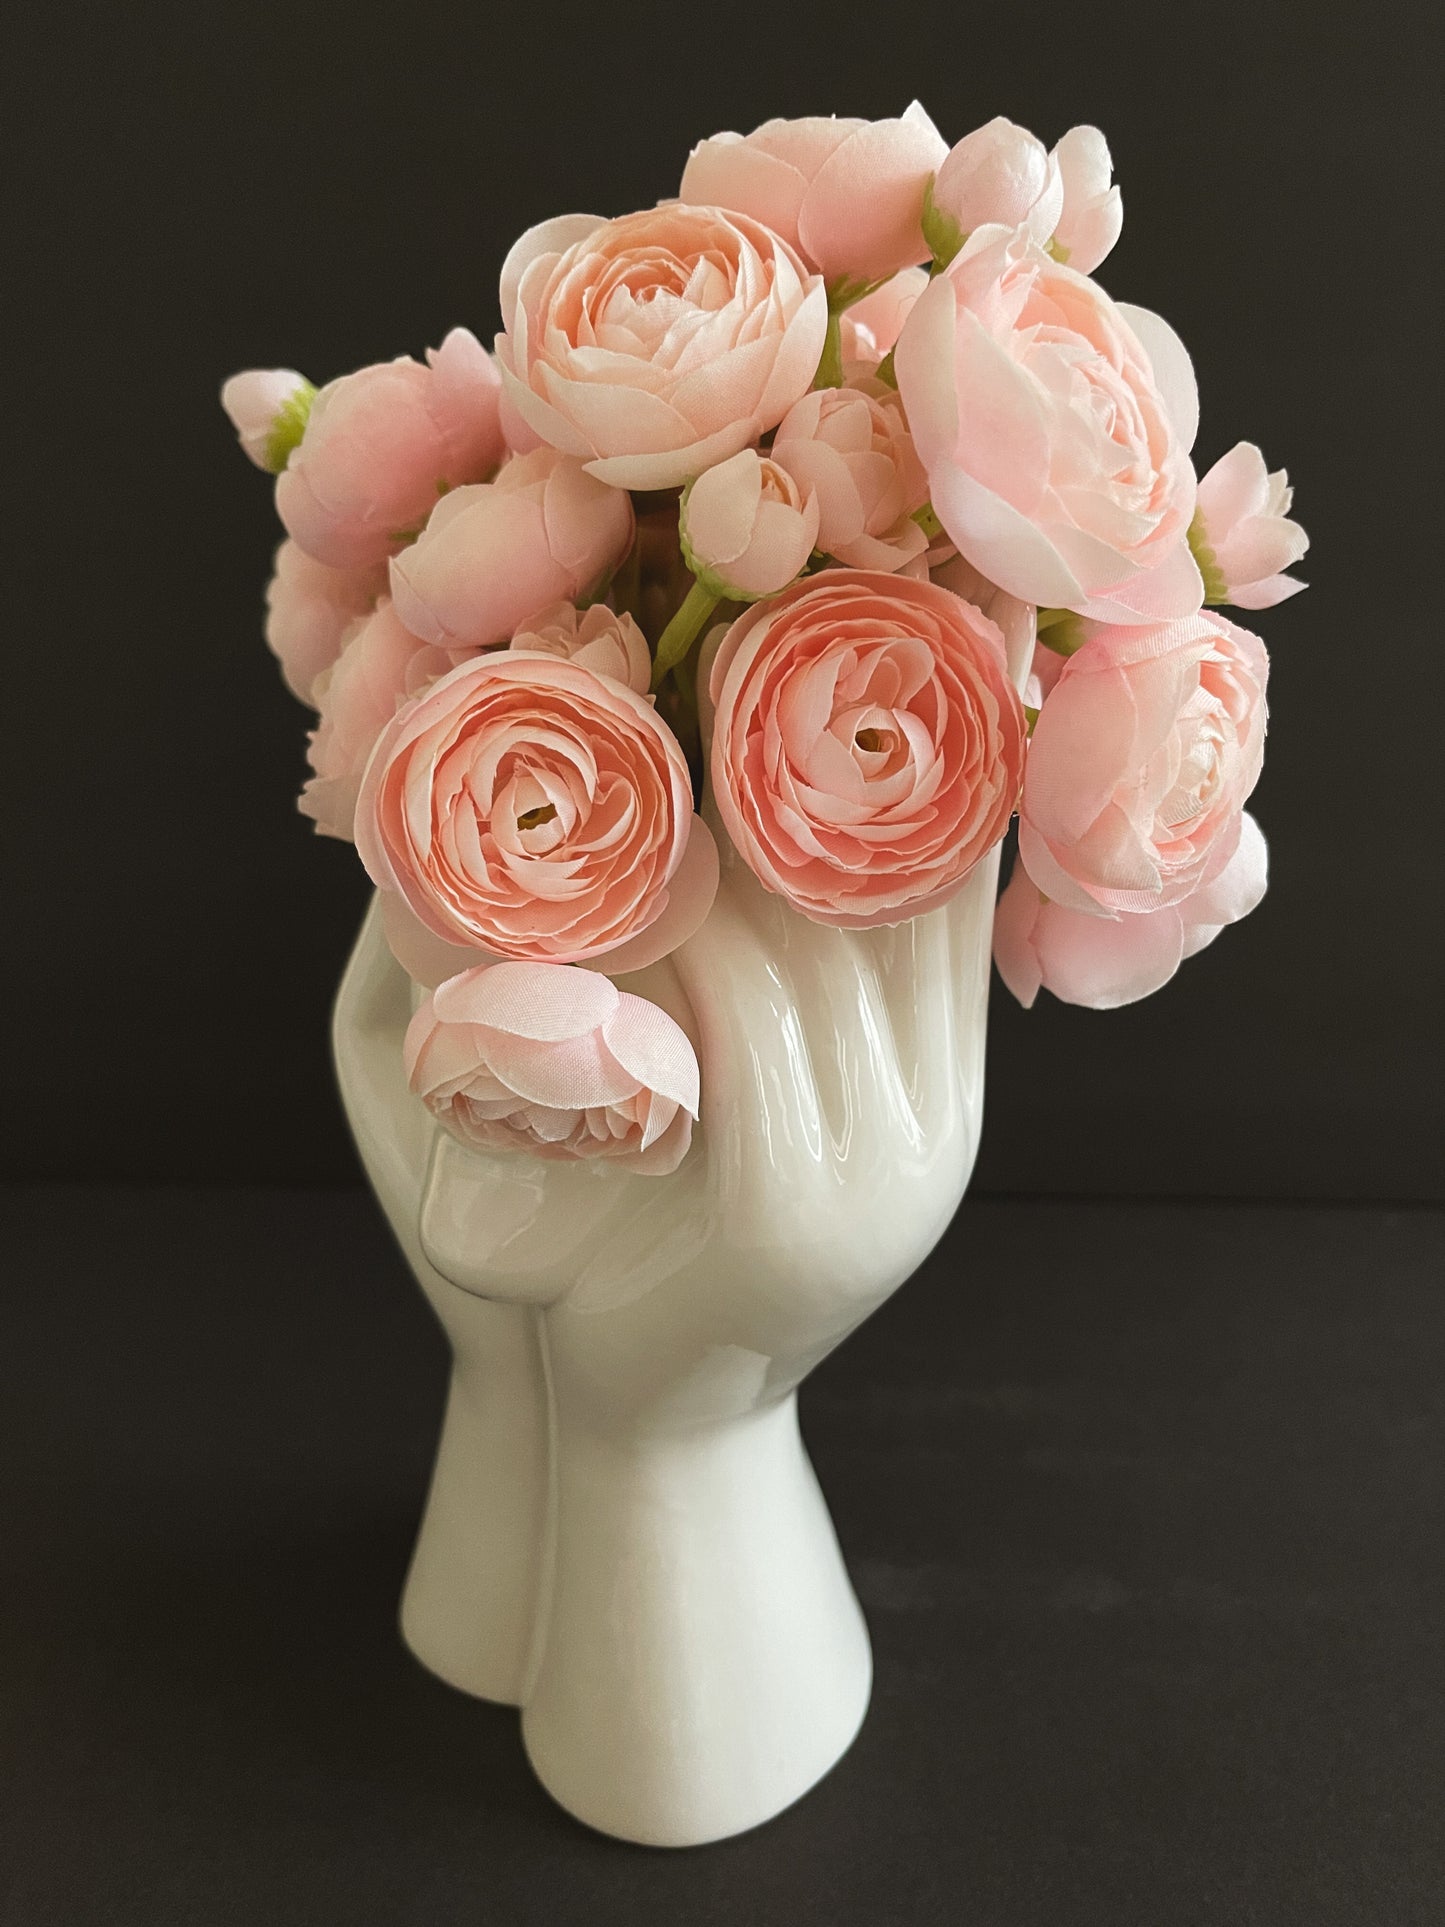 Lady Head Vase Arrangement with Artificial Pink Ranunculus